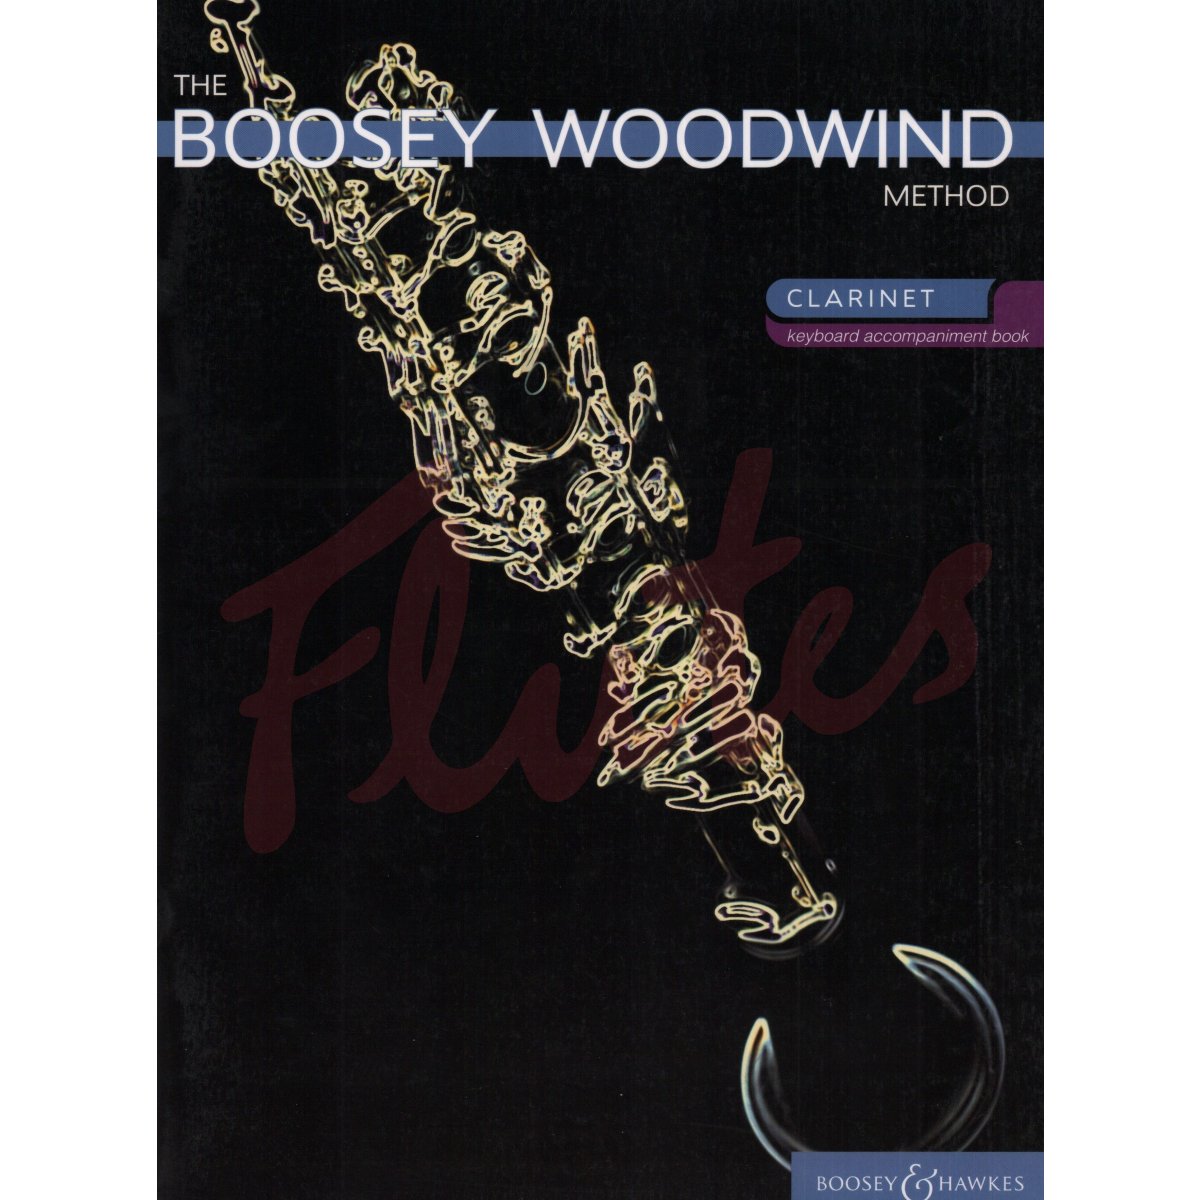 The Boosey Woodwind Method [Clarinet] Piano Accompaniment